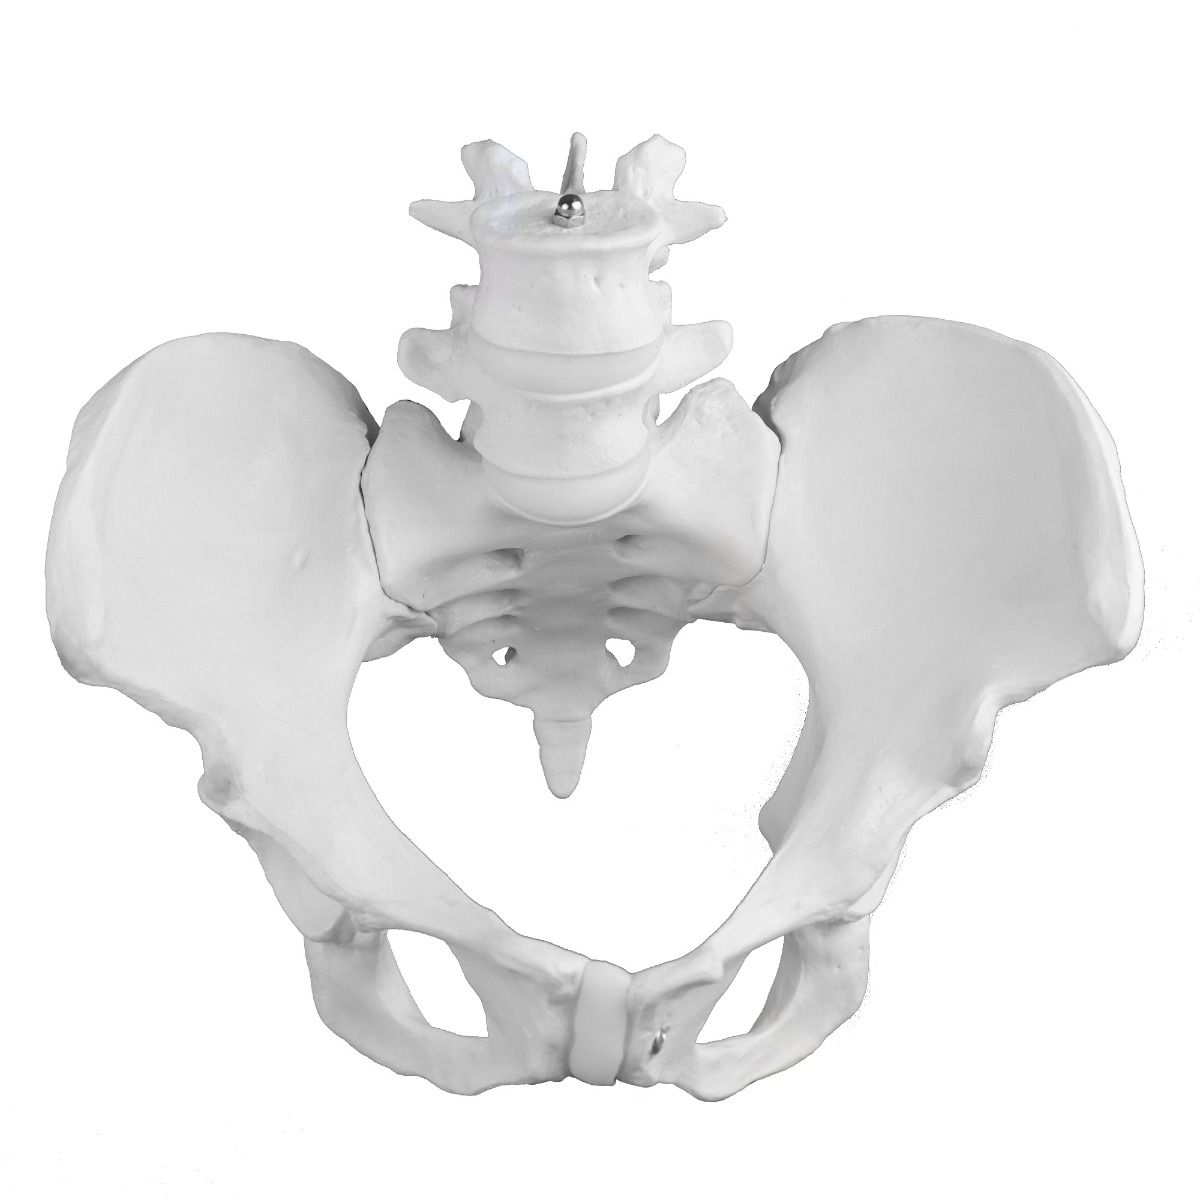 B10217 Female Pelvic Skeleton